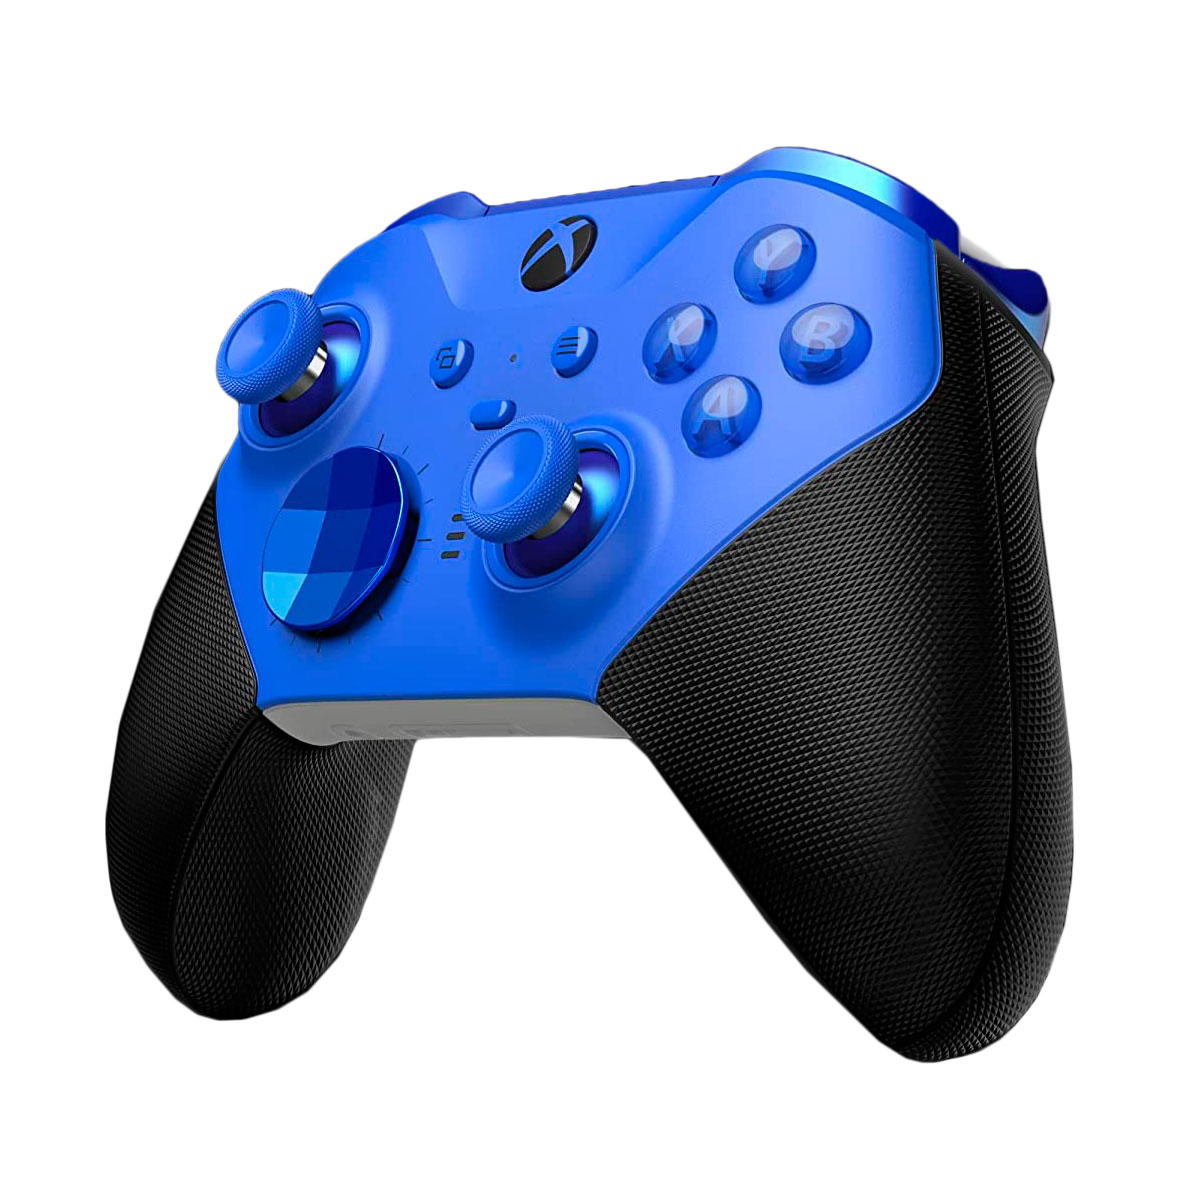 Беспроводной геймпад Microsoft Xbox Elite Series 2, синий/черный сумка чехол airform controller pouch для геймпада sony dualshock 4 wireless controller черный ps4